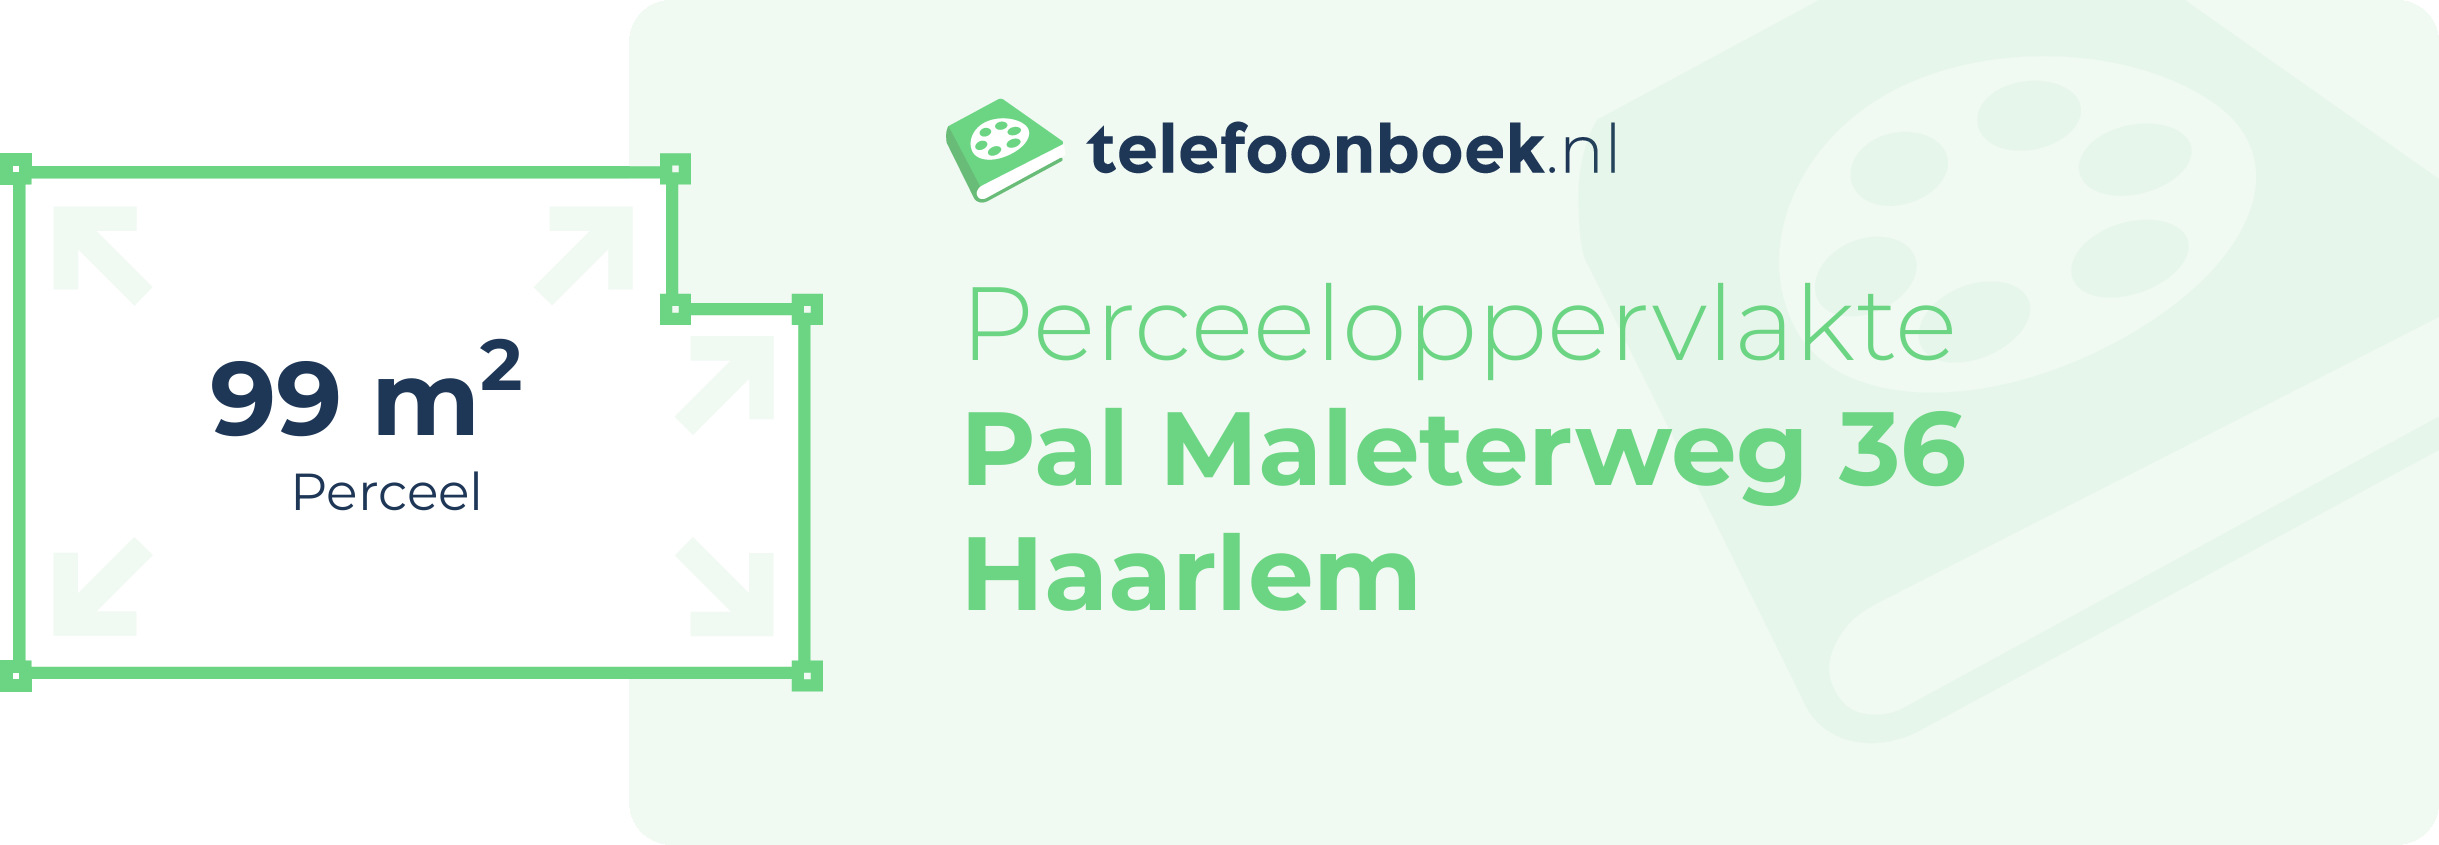 Perceeloppervlakte Pal Maleterweg 36 Haarlem